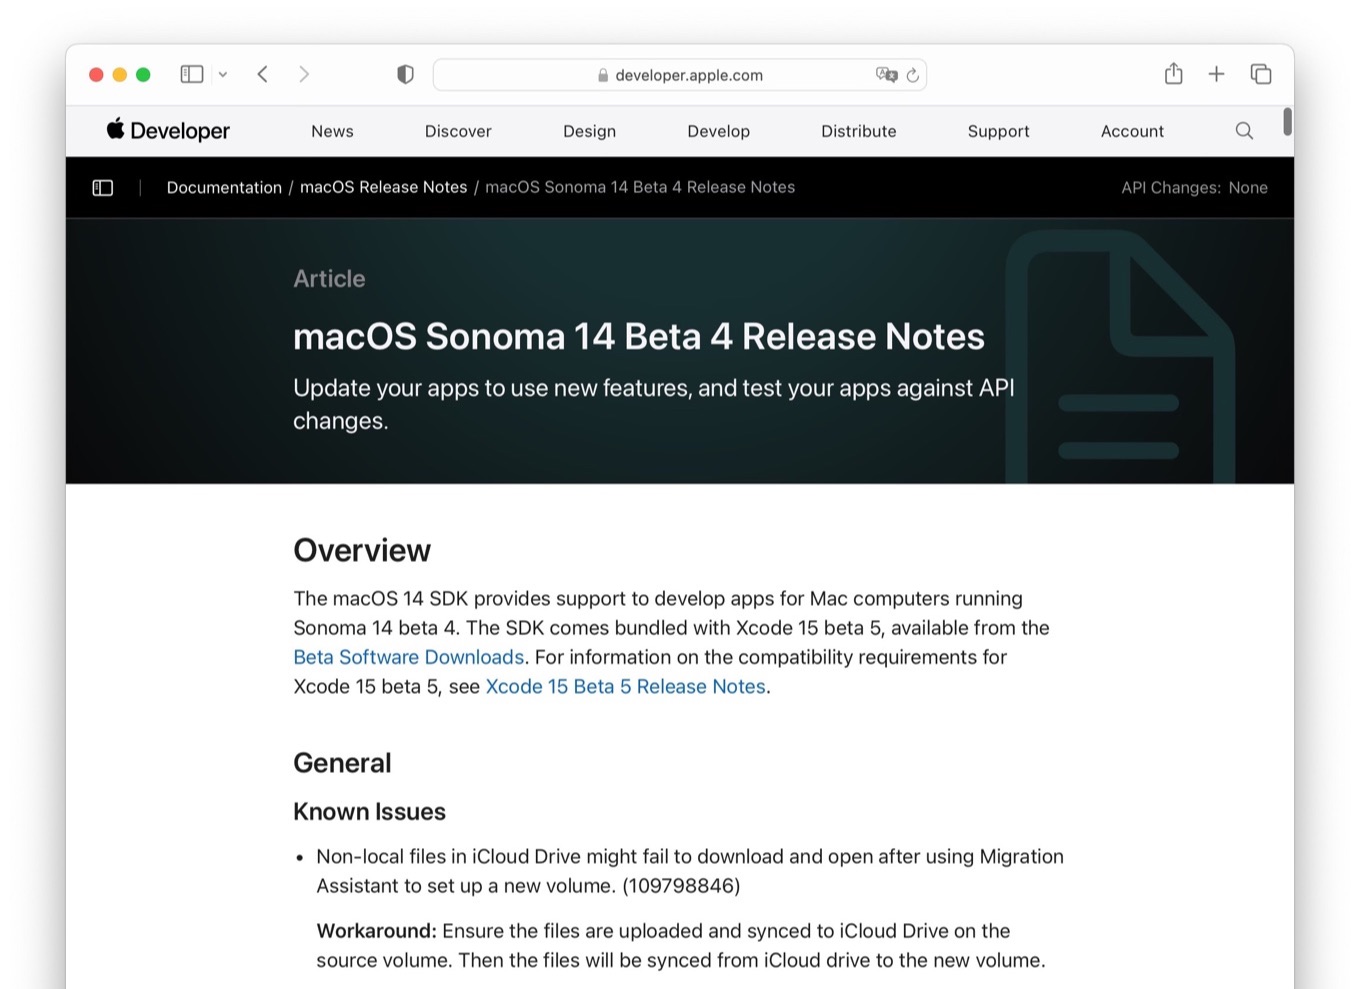 macOS Sonoma 14 Beta 4 Release Notes